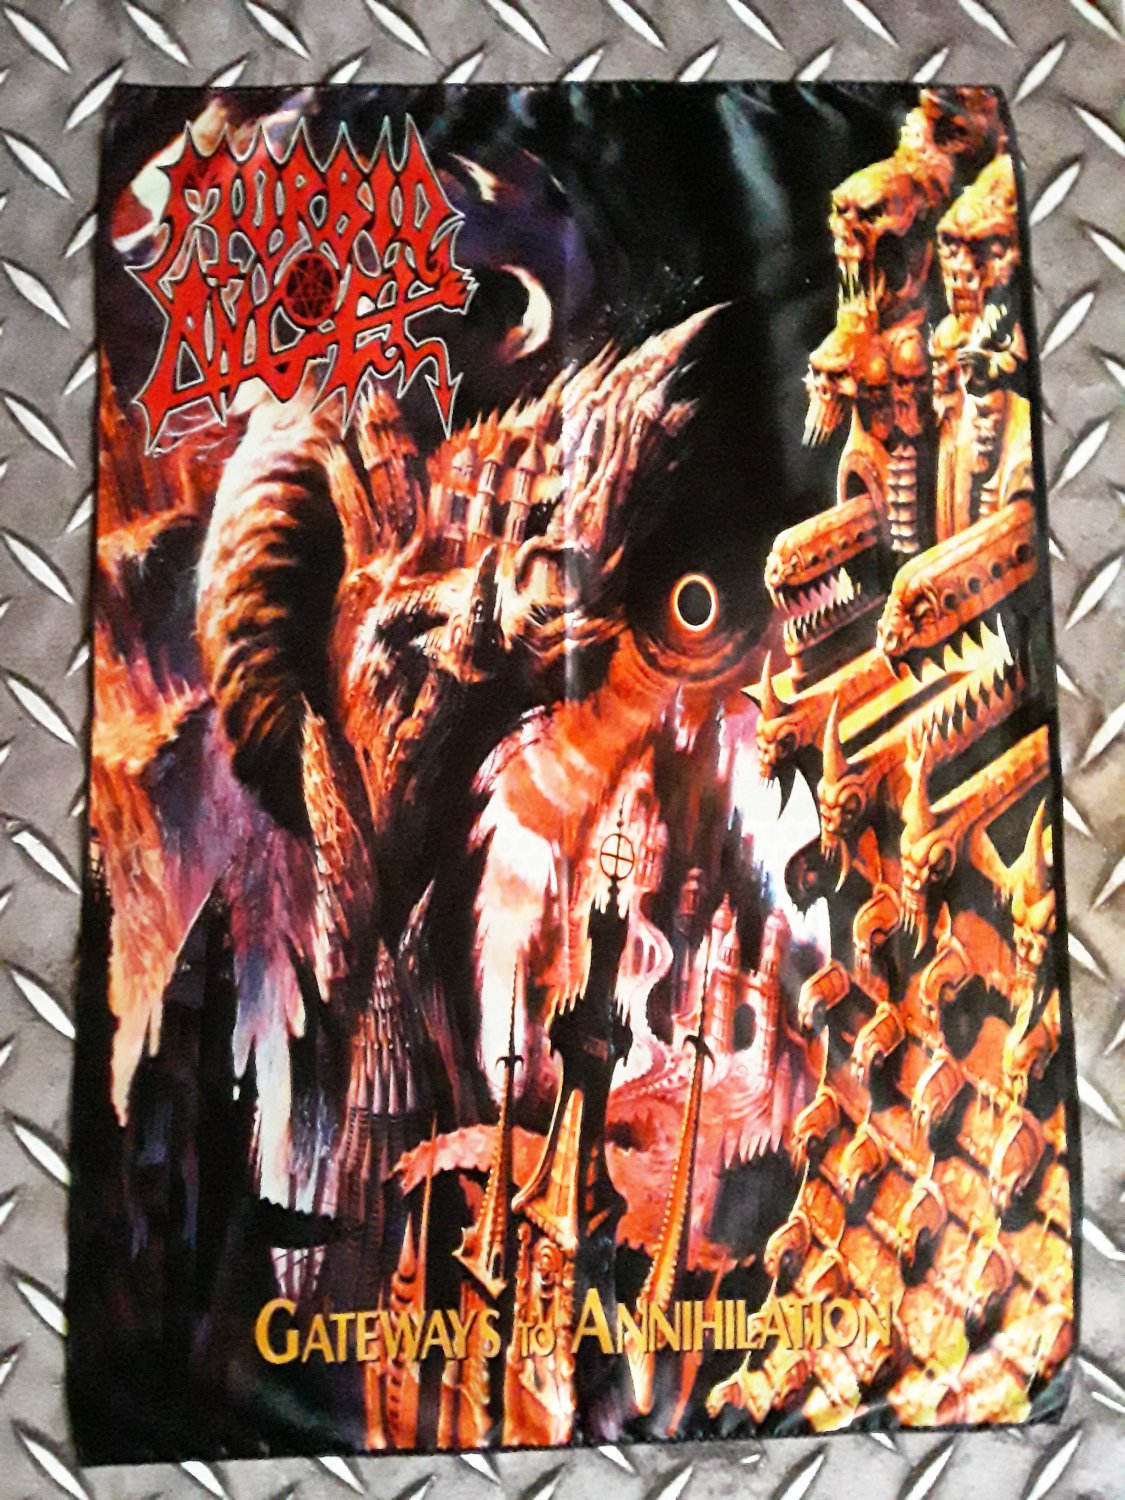 MORBID ANGEL - Gateways to annihilation FLAG Heavy death metal cloth poster